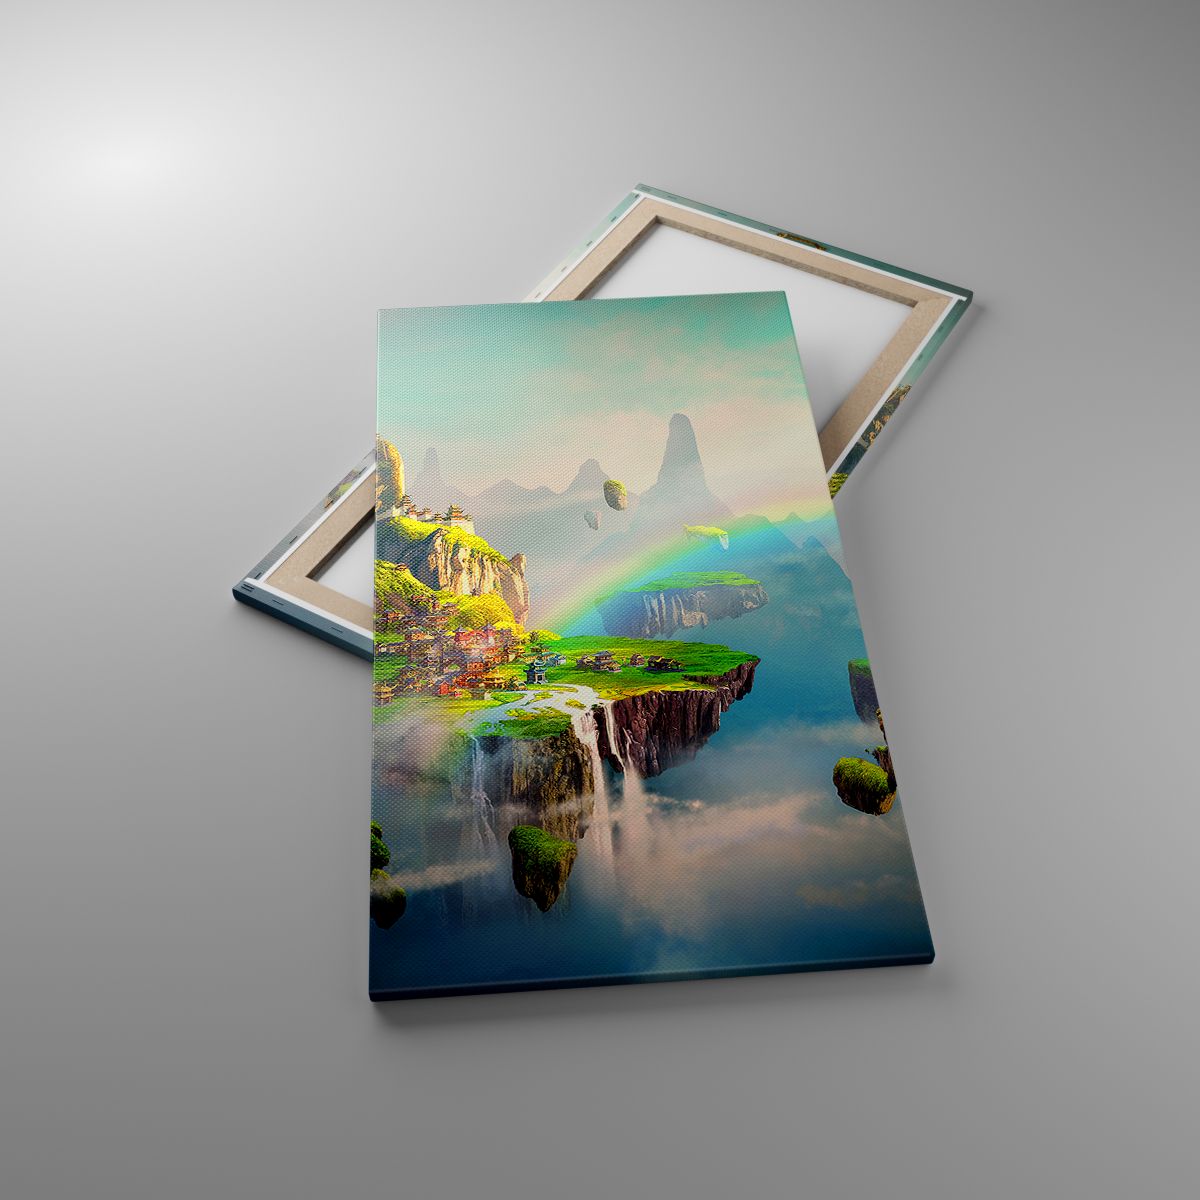 Leinwandbild Fantastisch, Leinwandbild Abstraktion, Leinwandbild Landschaft, Leinwandbild Regenbogen, Leinwandbild Wasserfall